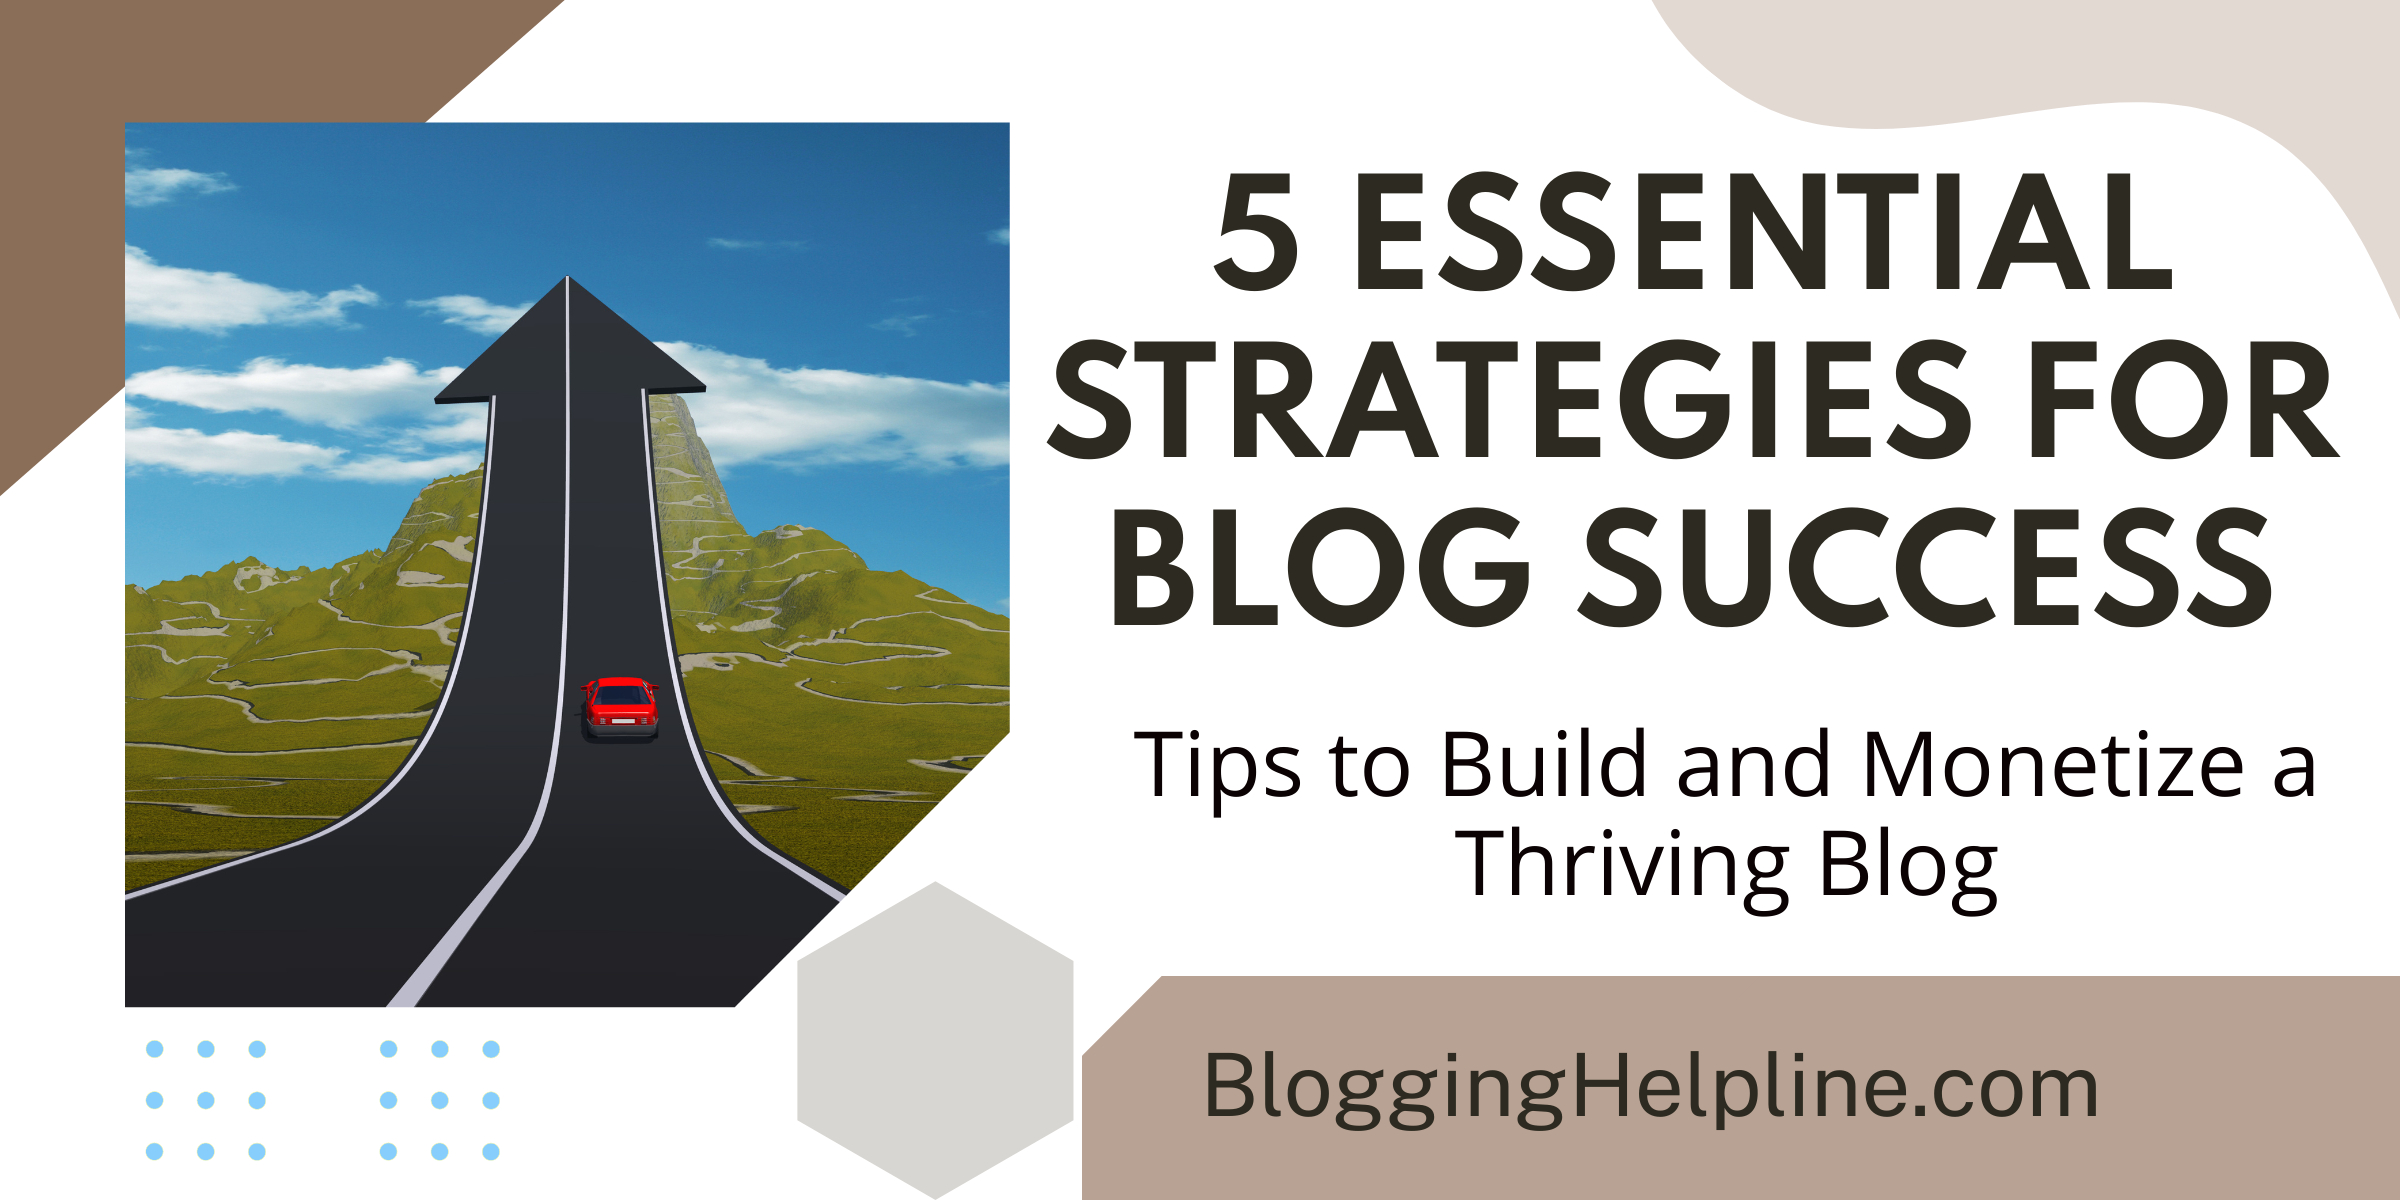 5 Essential Strategies for Blog Success